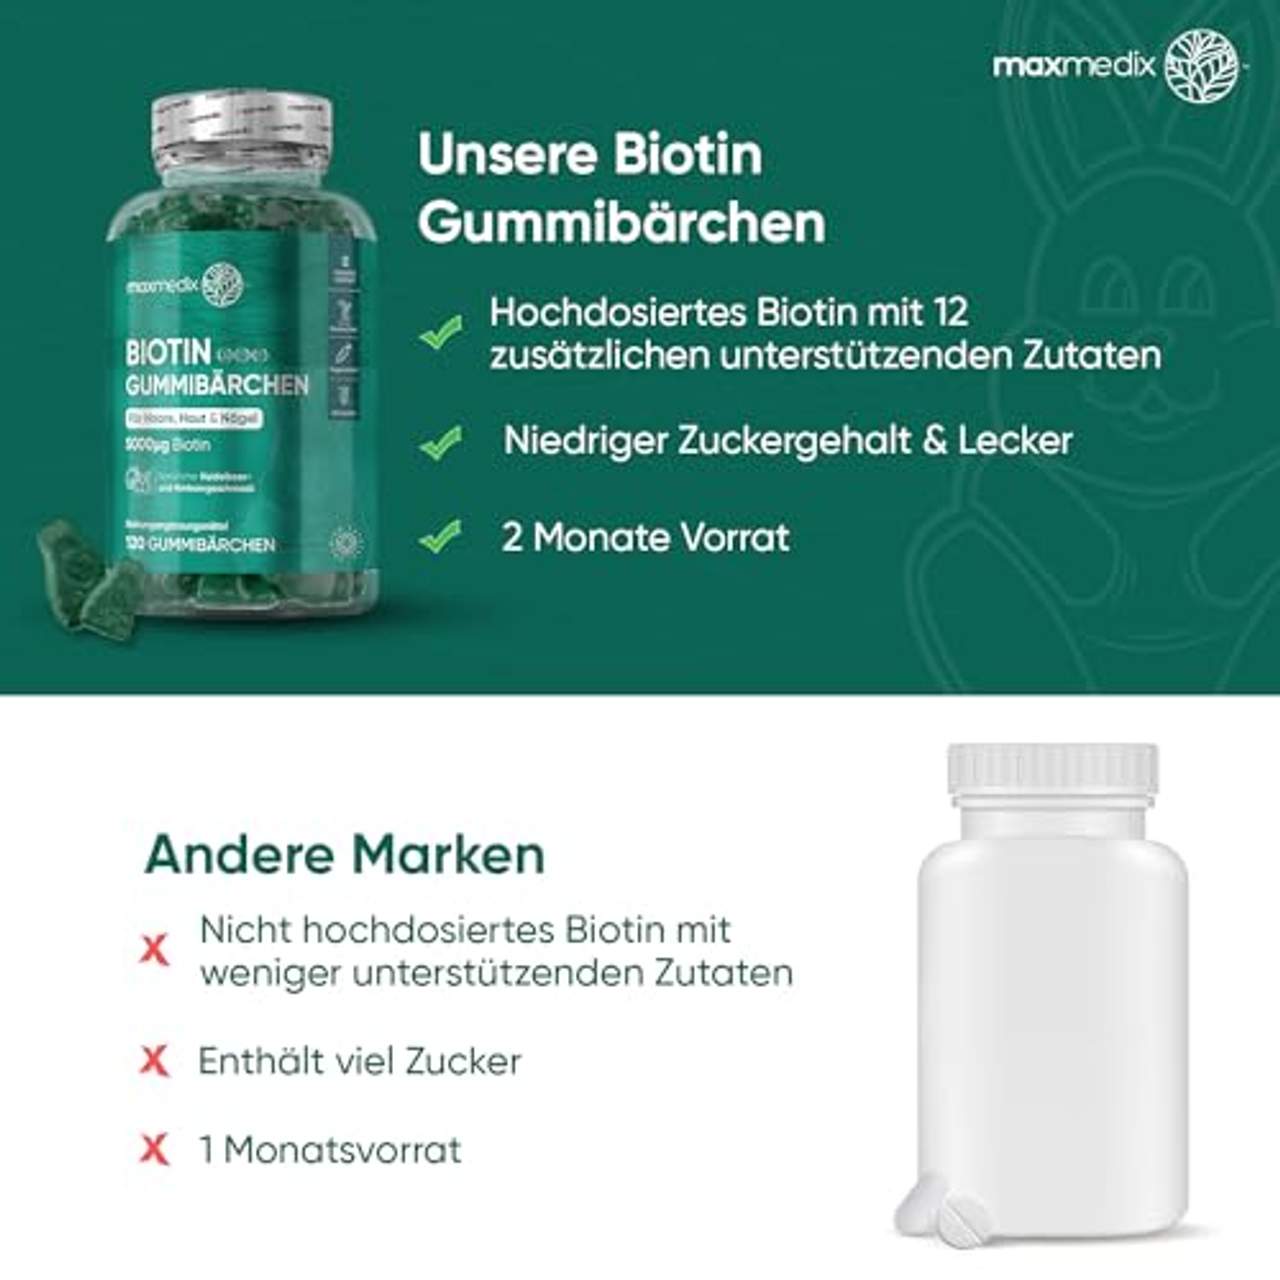 MaxMedix Biotin Gummibärchen